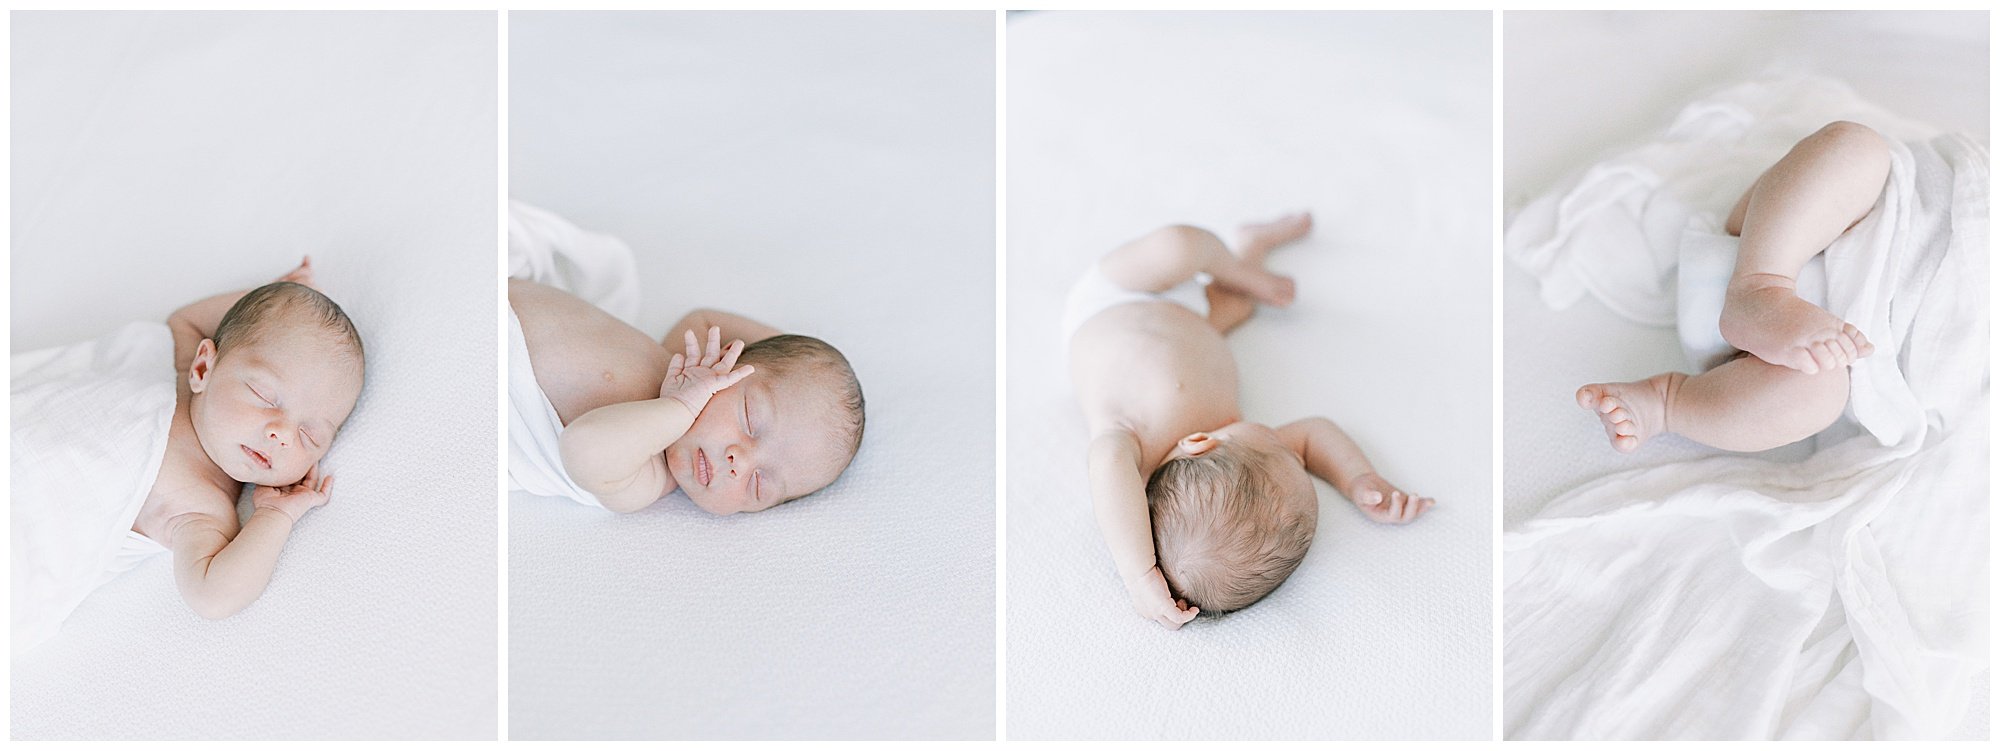 newborn-details-in-white-studio.jpg